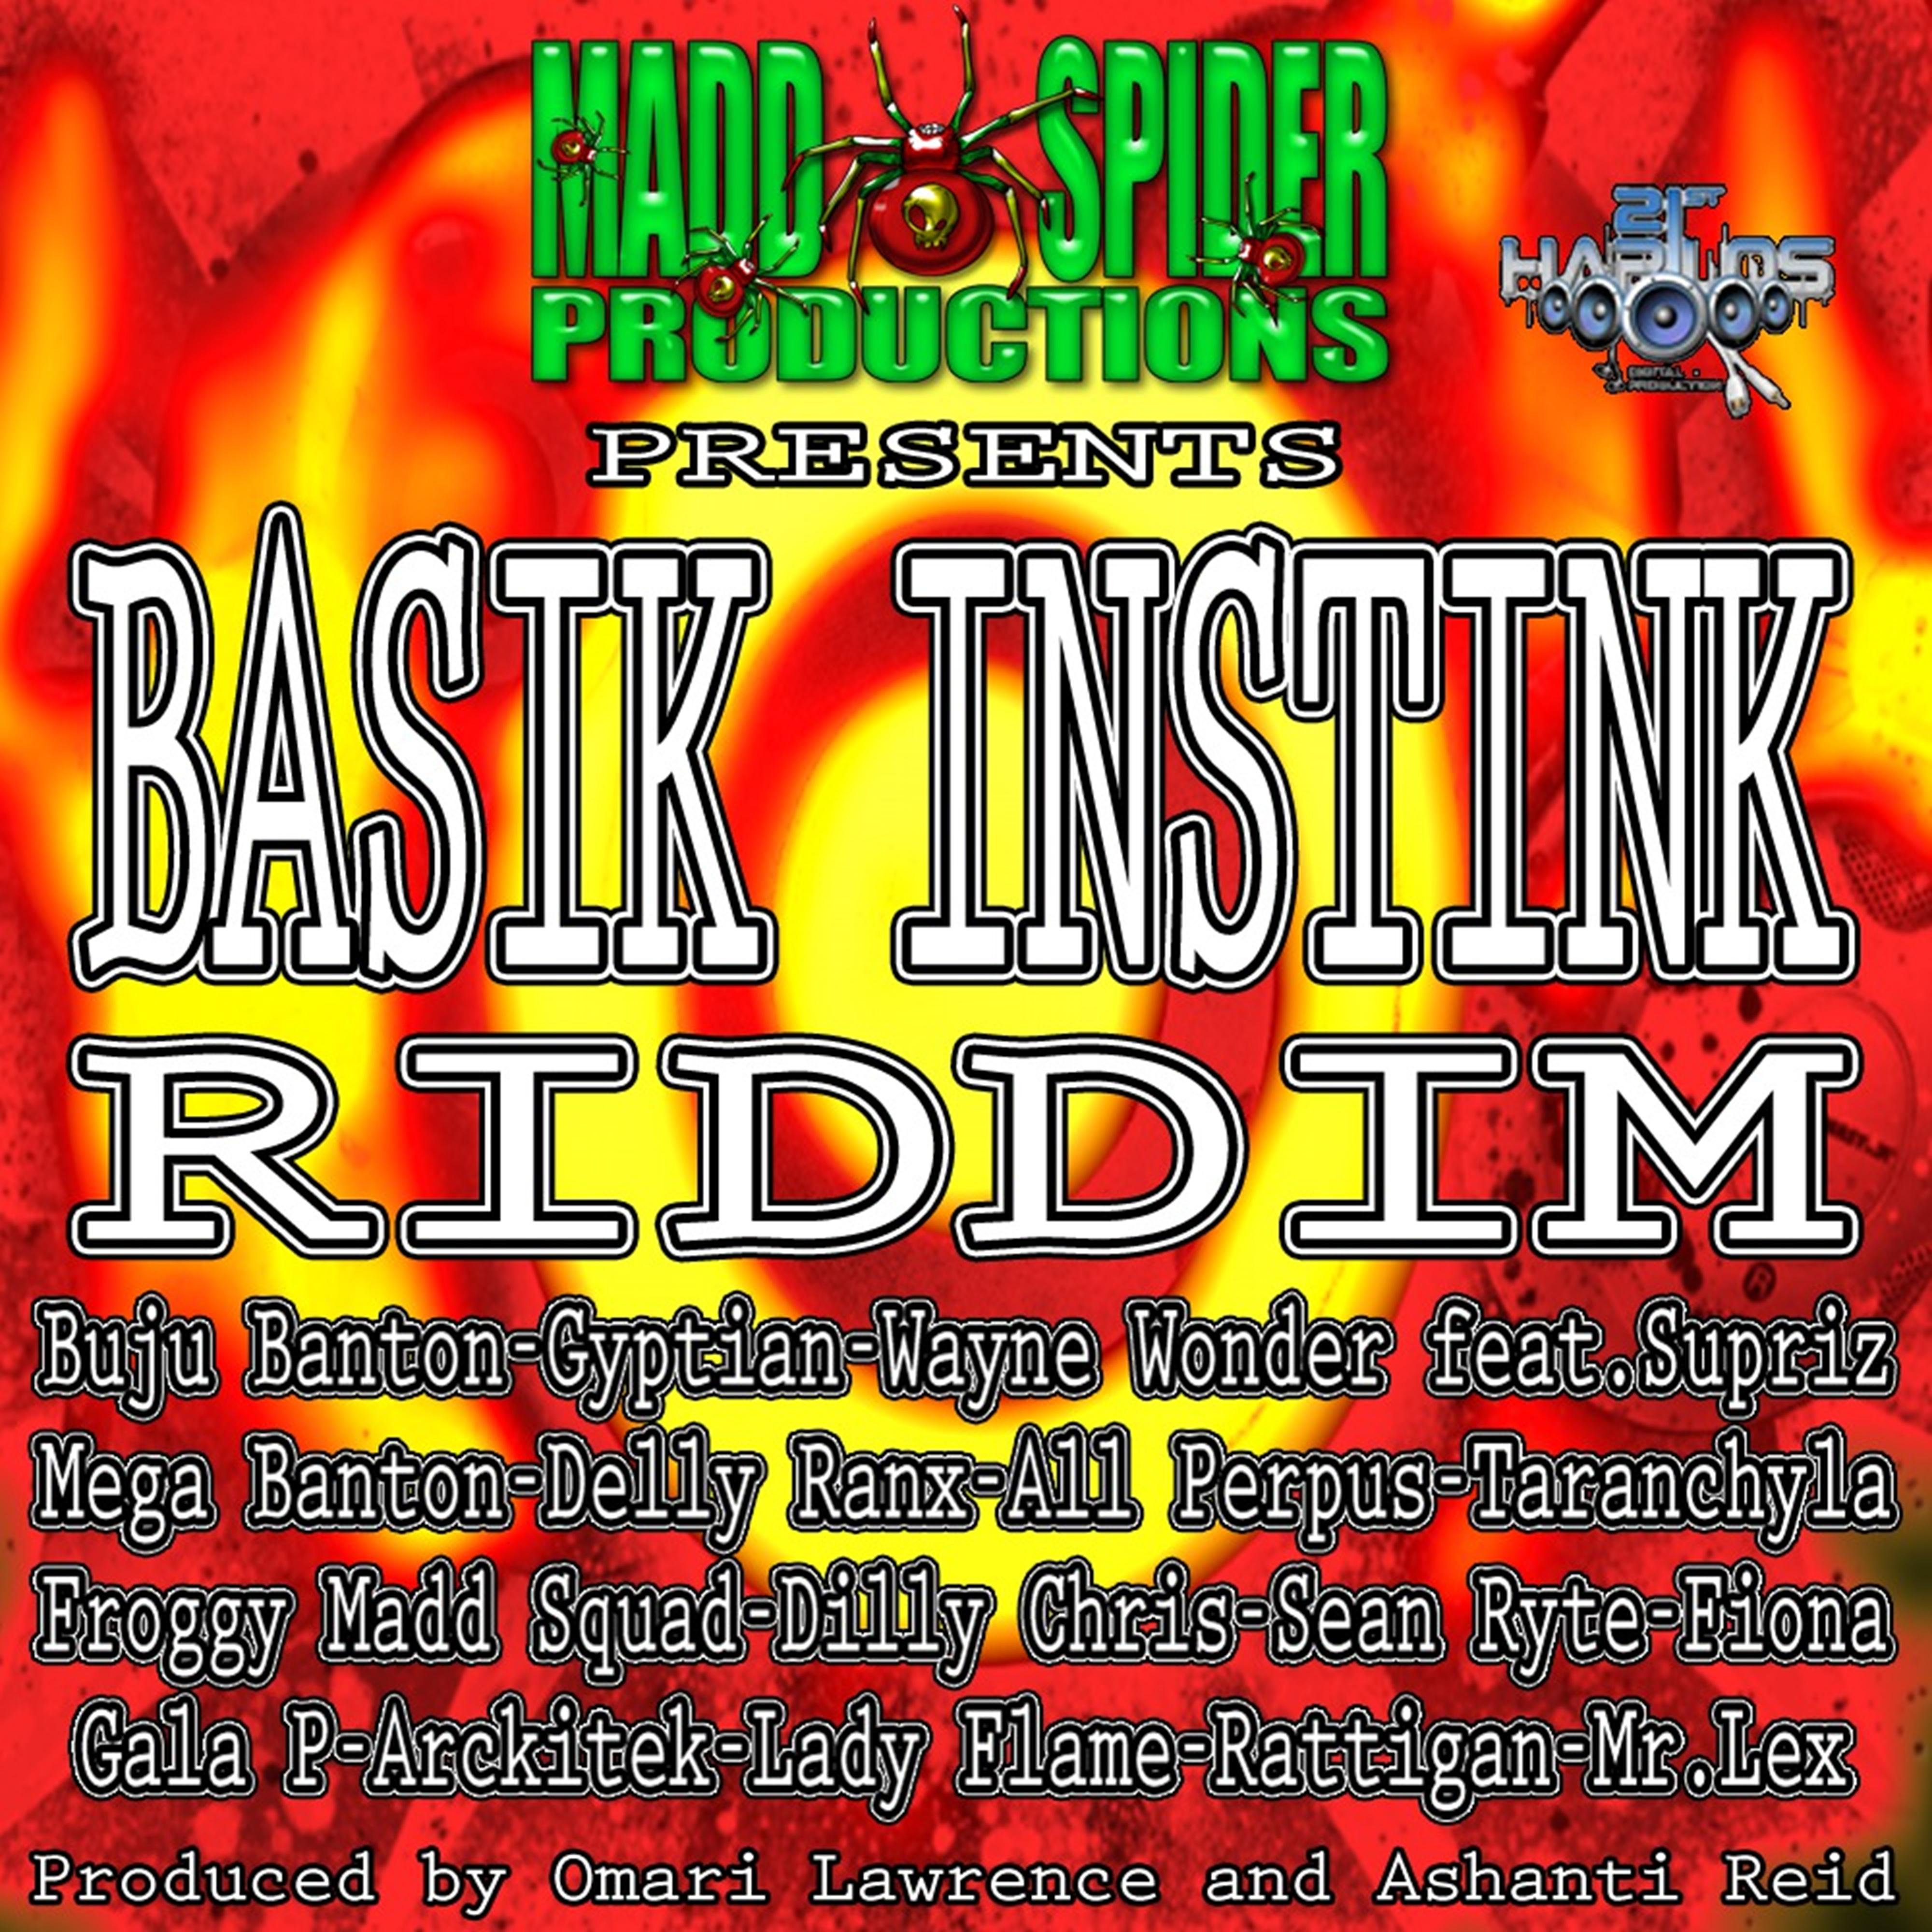 Basik Instink Riddim